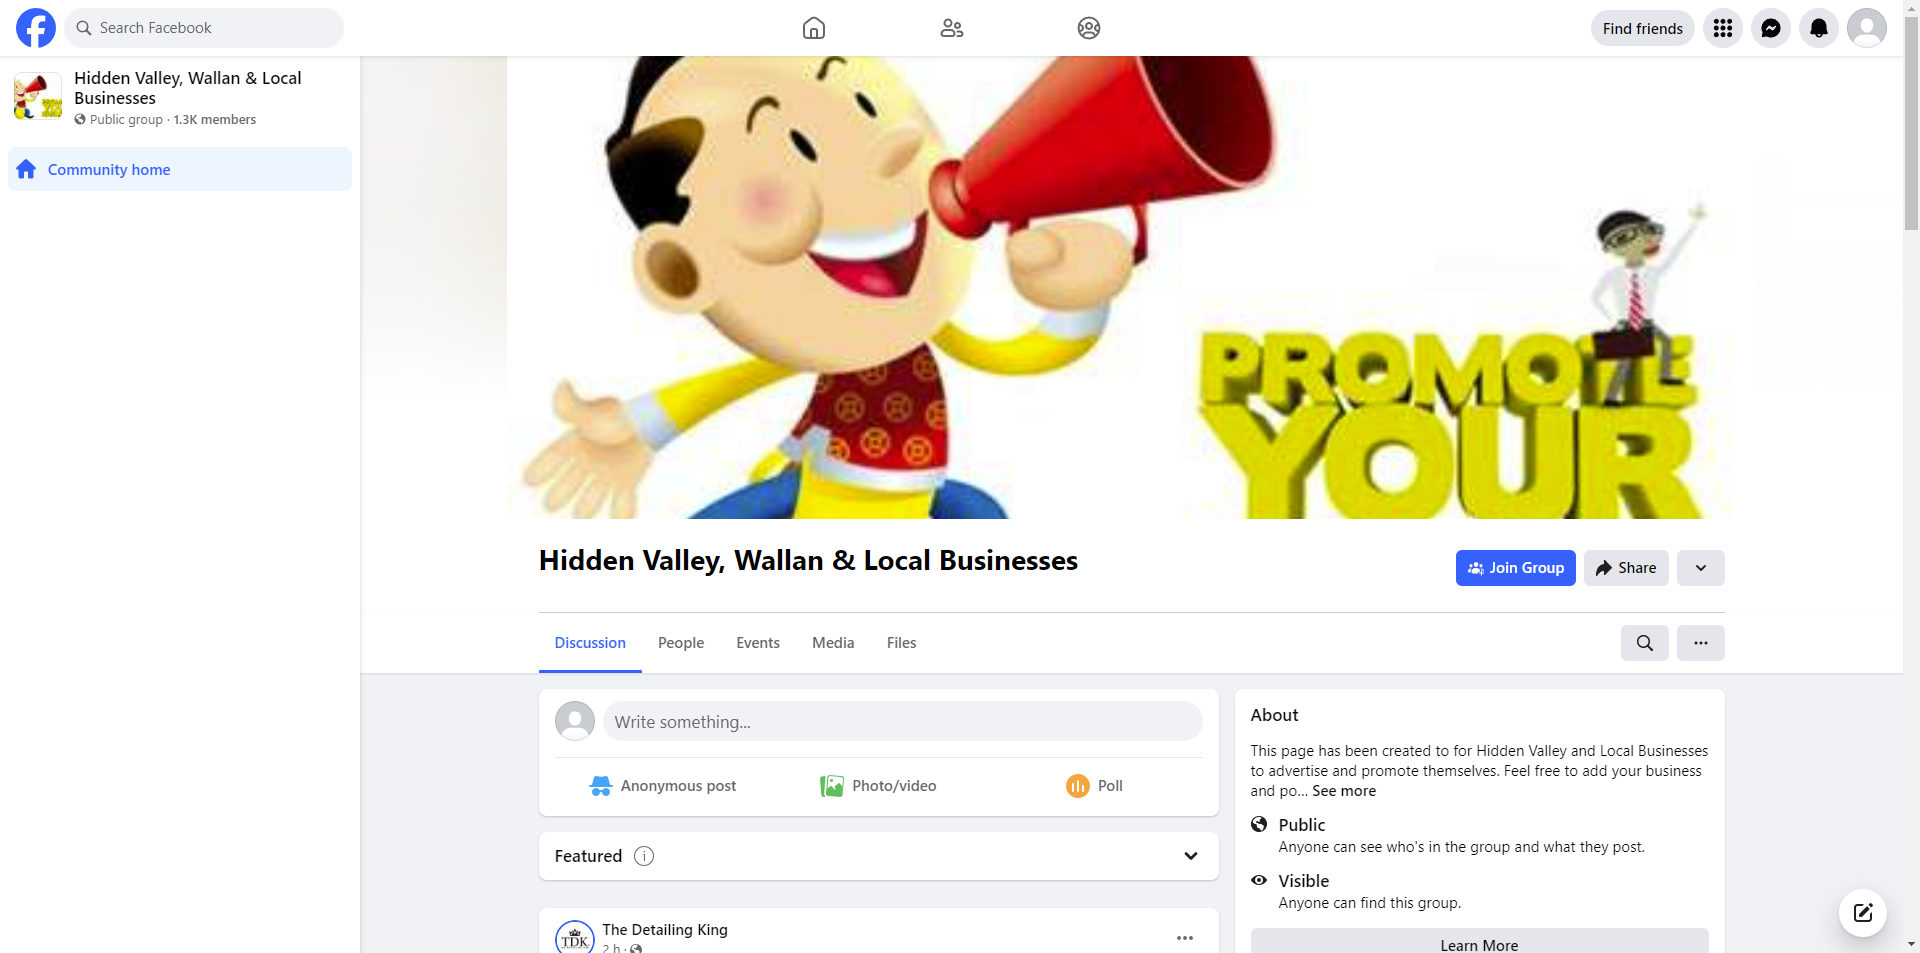 Hidden Valley, Wallan & Local Businesses